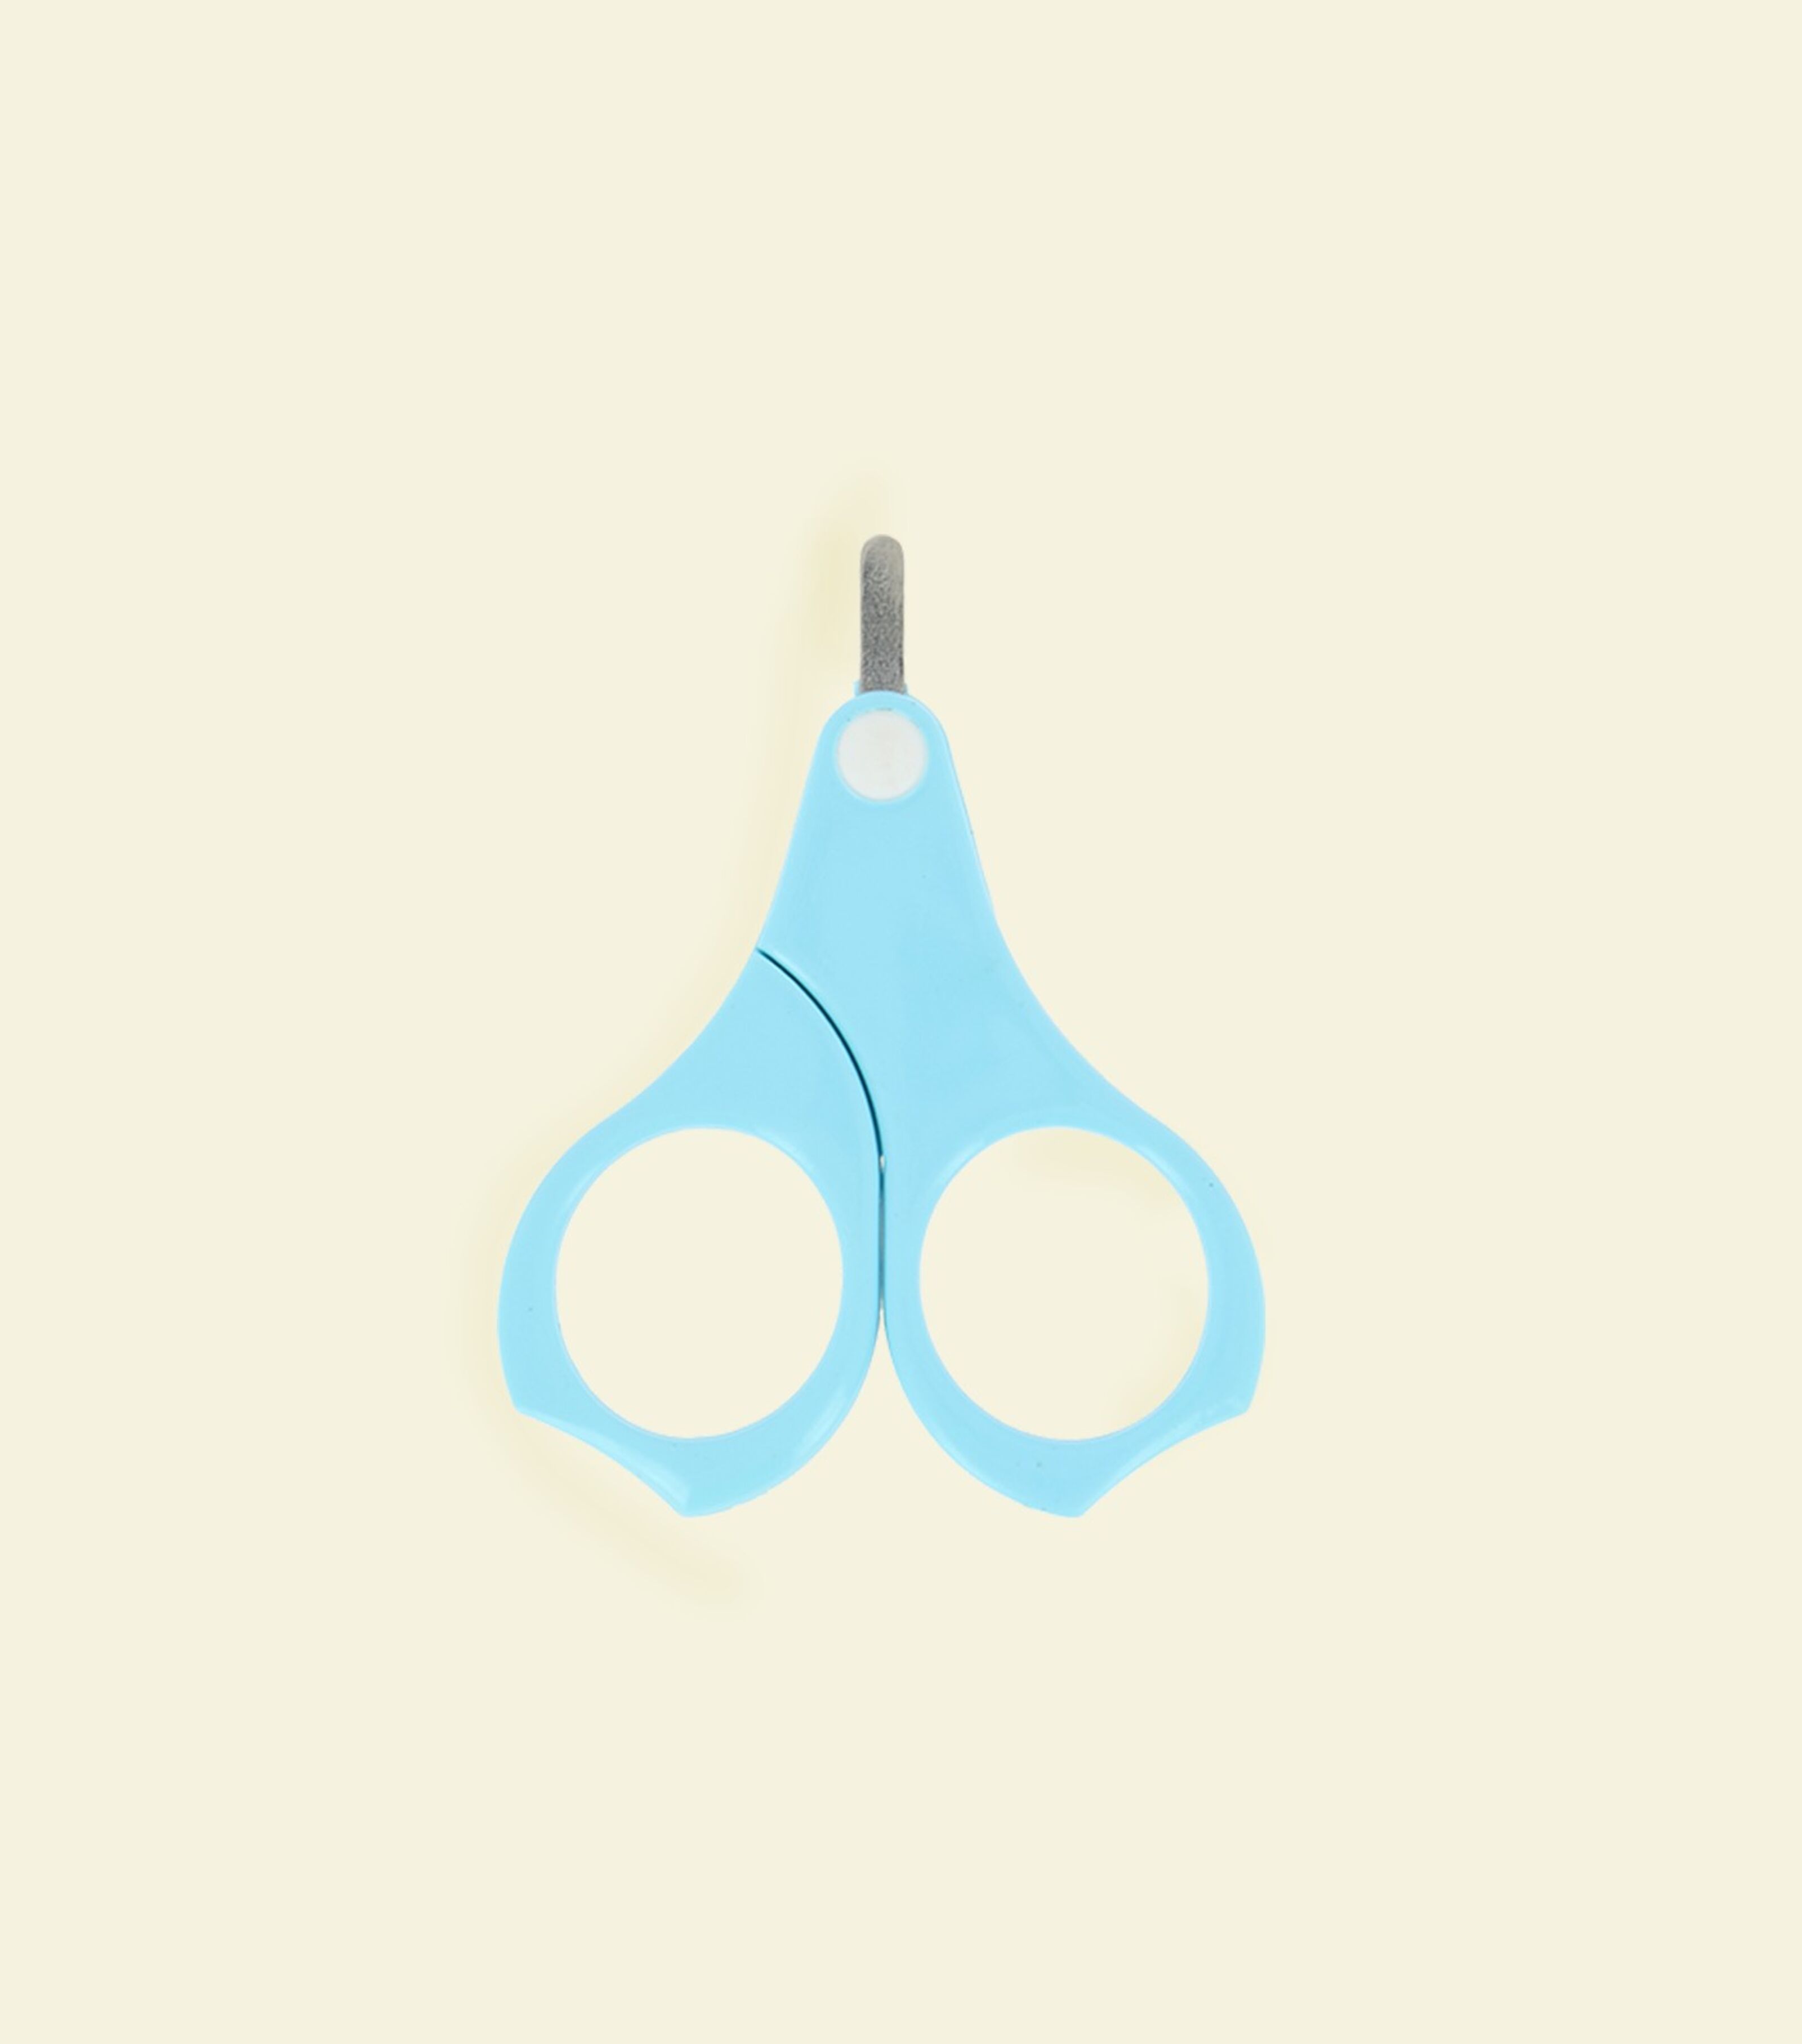 Buy wholesale Baby Scissors (SKU: 2000BB-JCHBA2/blue)